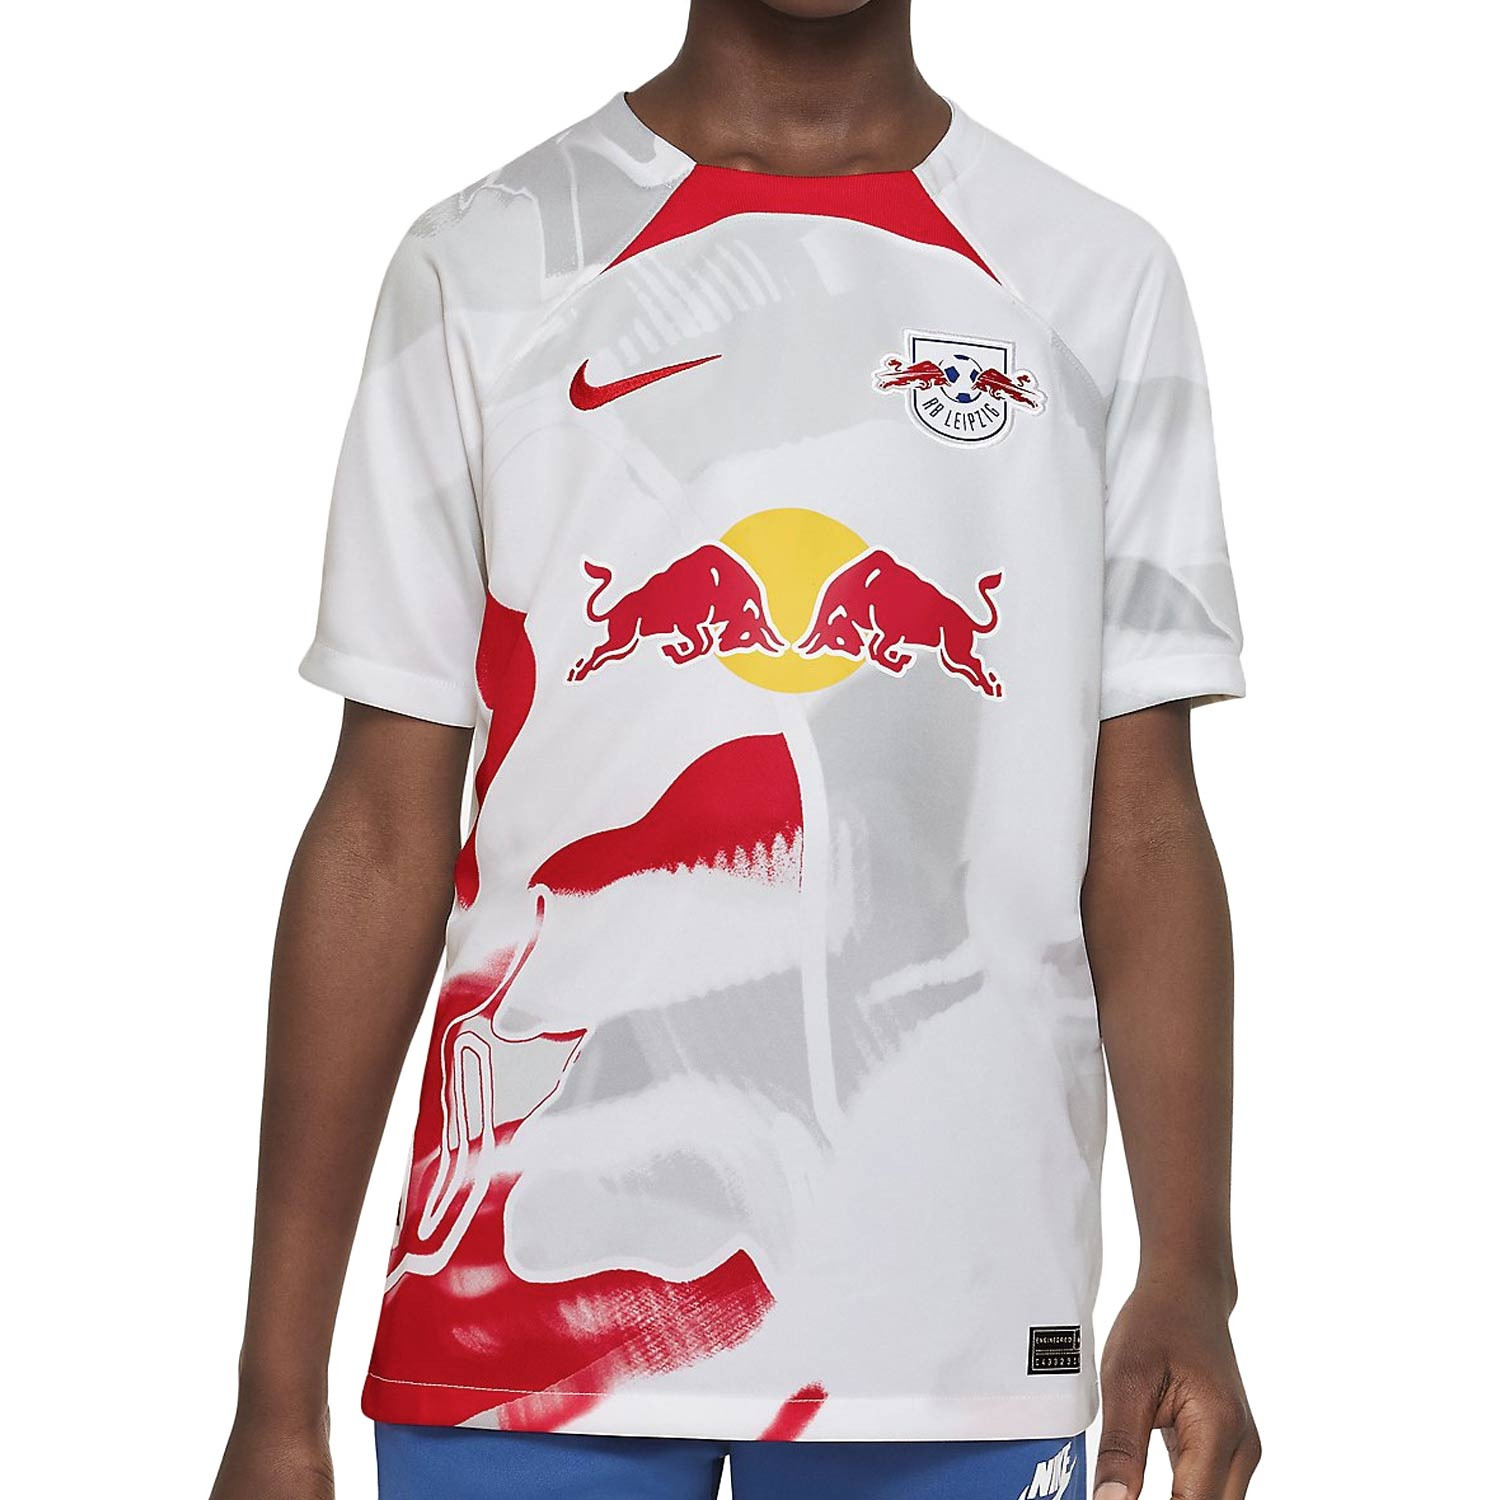 Camisetas Nike del Red Bull Salzburg 2021/22